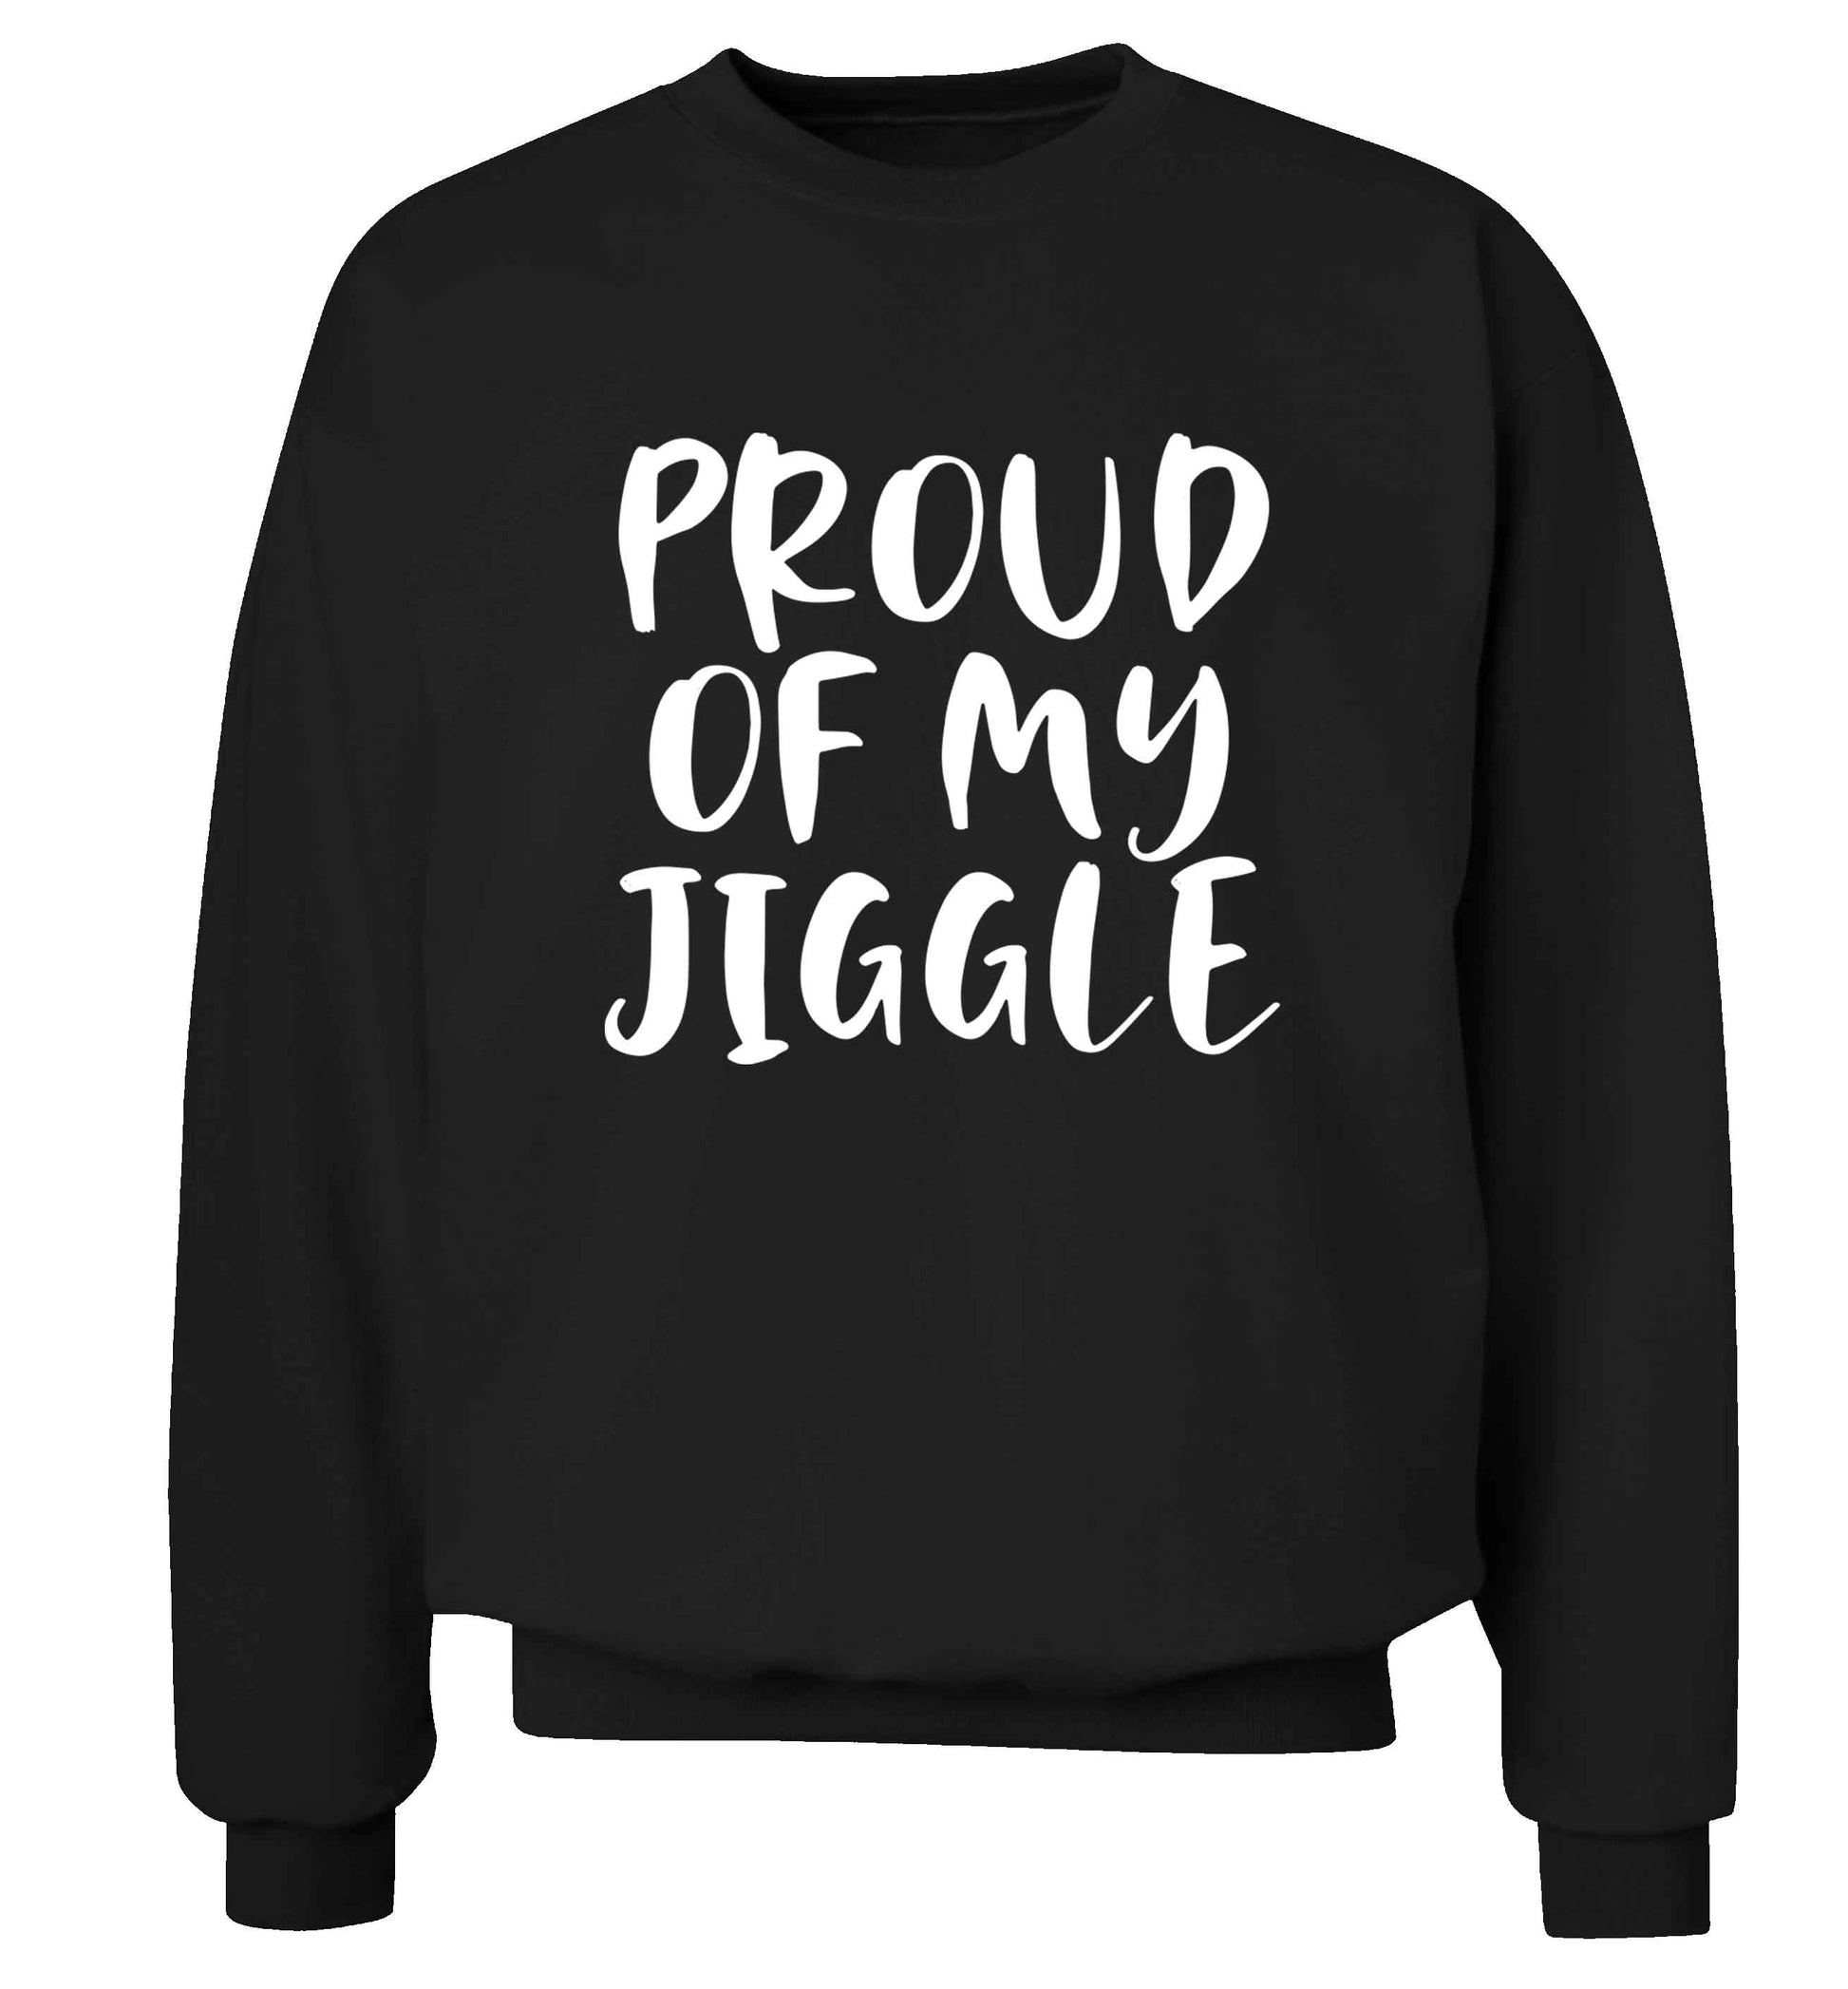 Proud of my jiggle adult's unisex black sweater 2XL